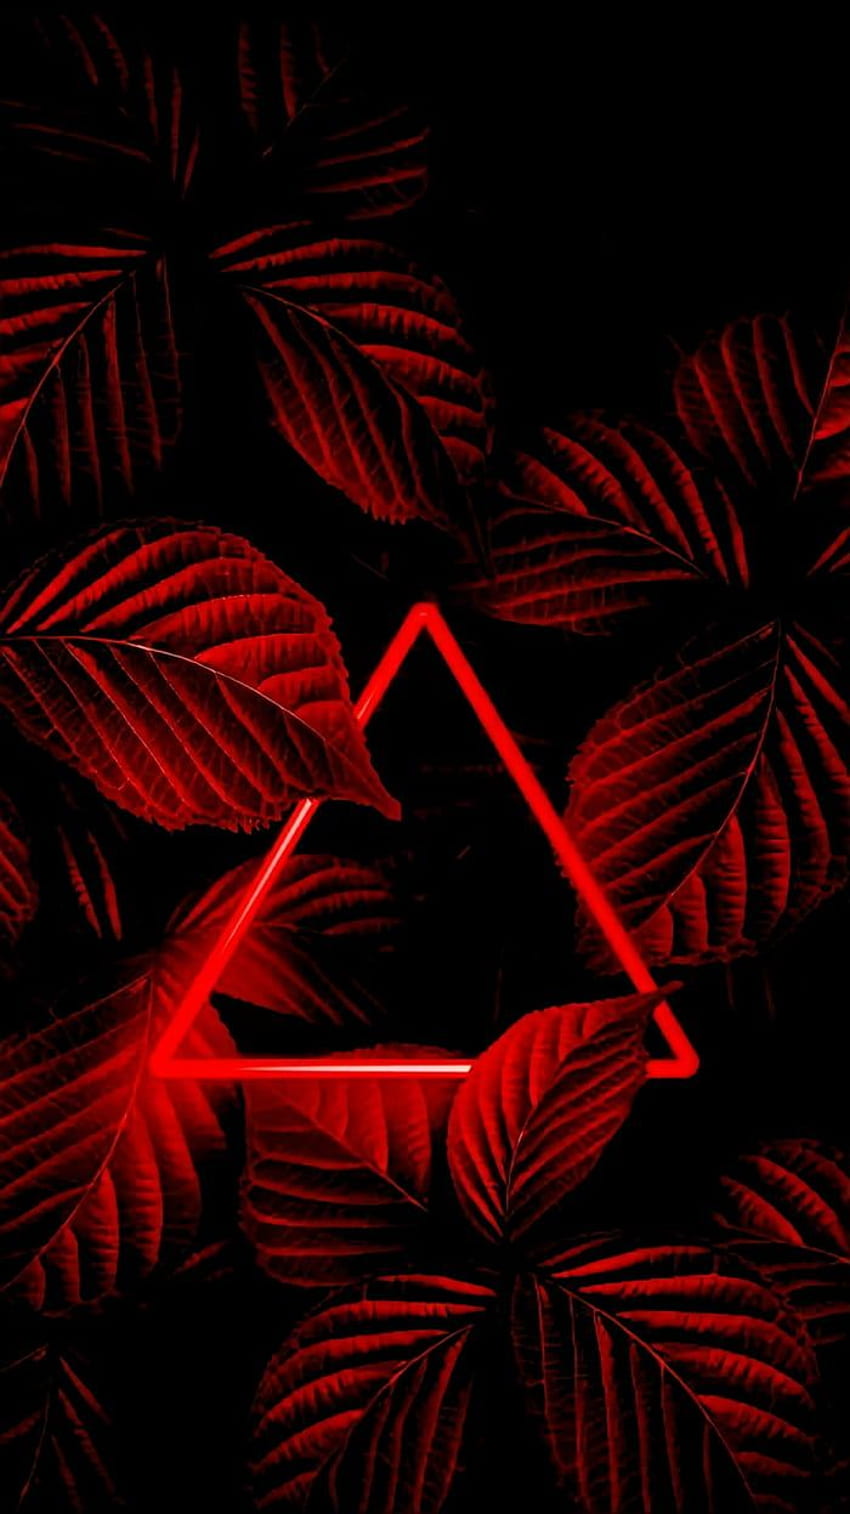 Dark Red Background Images  Free Download on Freepik